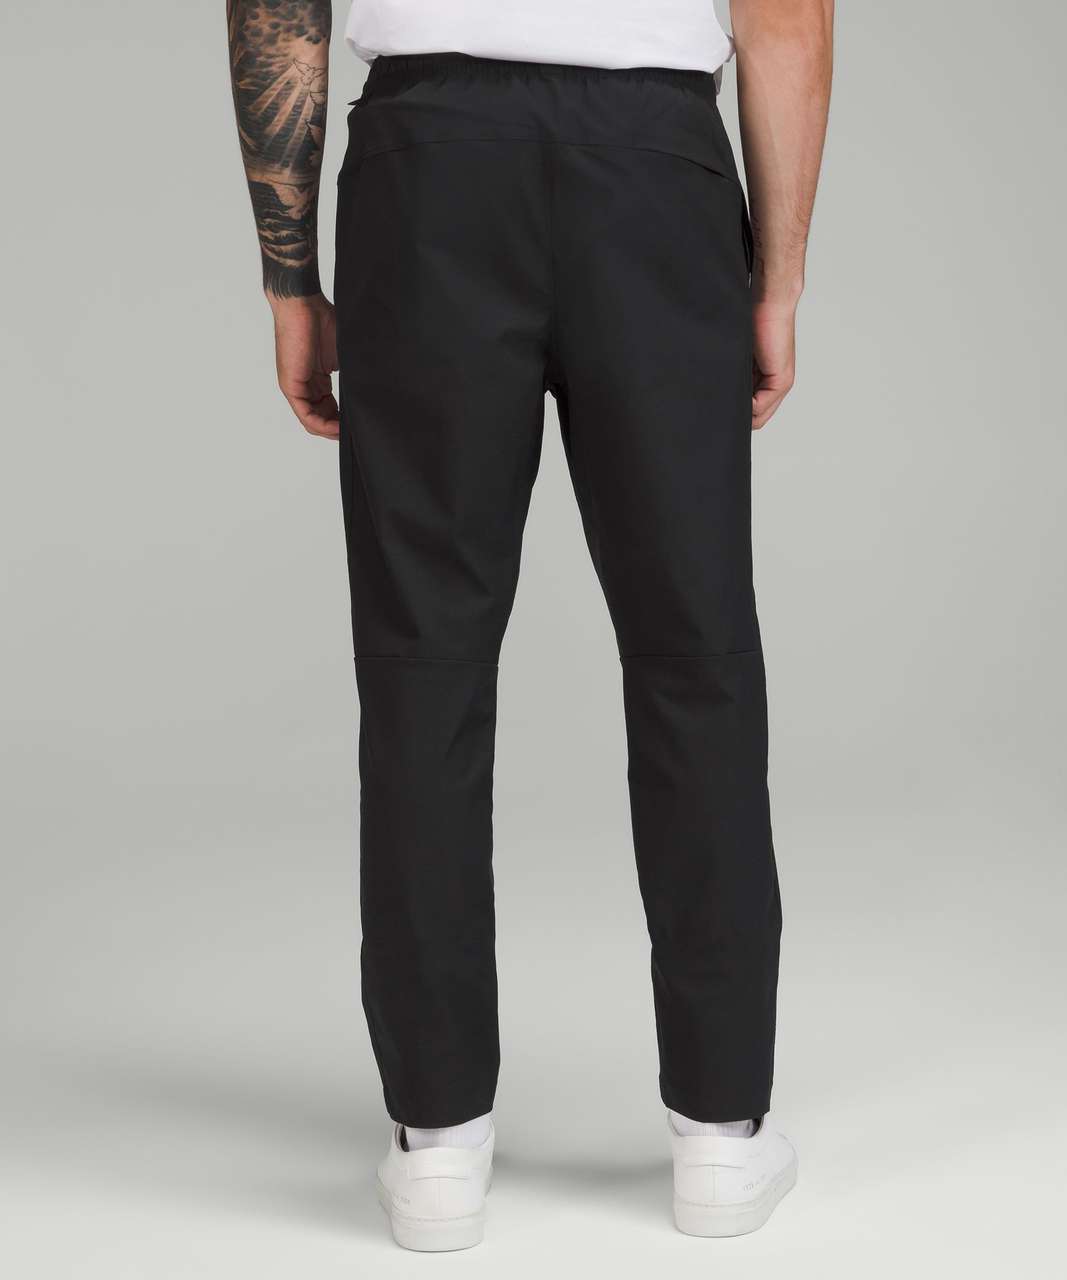 Lululemon New Venture Trouser *Twill Fabric - Black - lulu fanatics